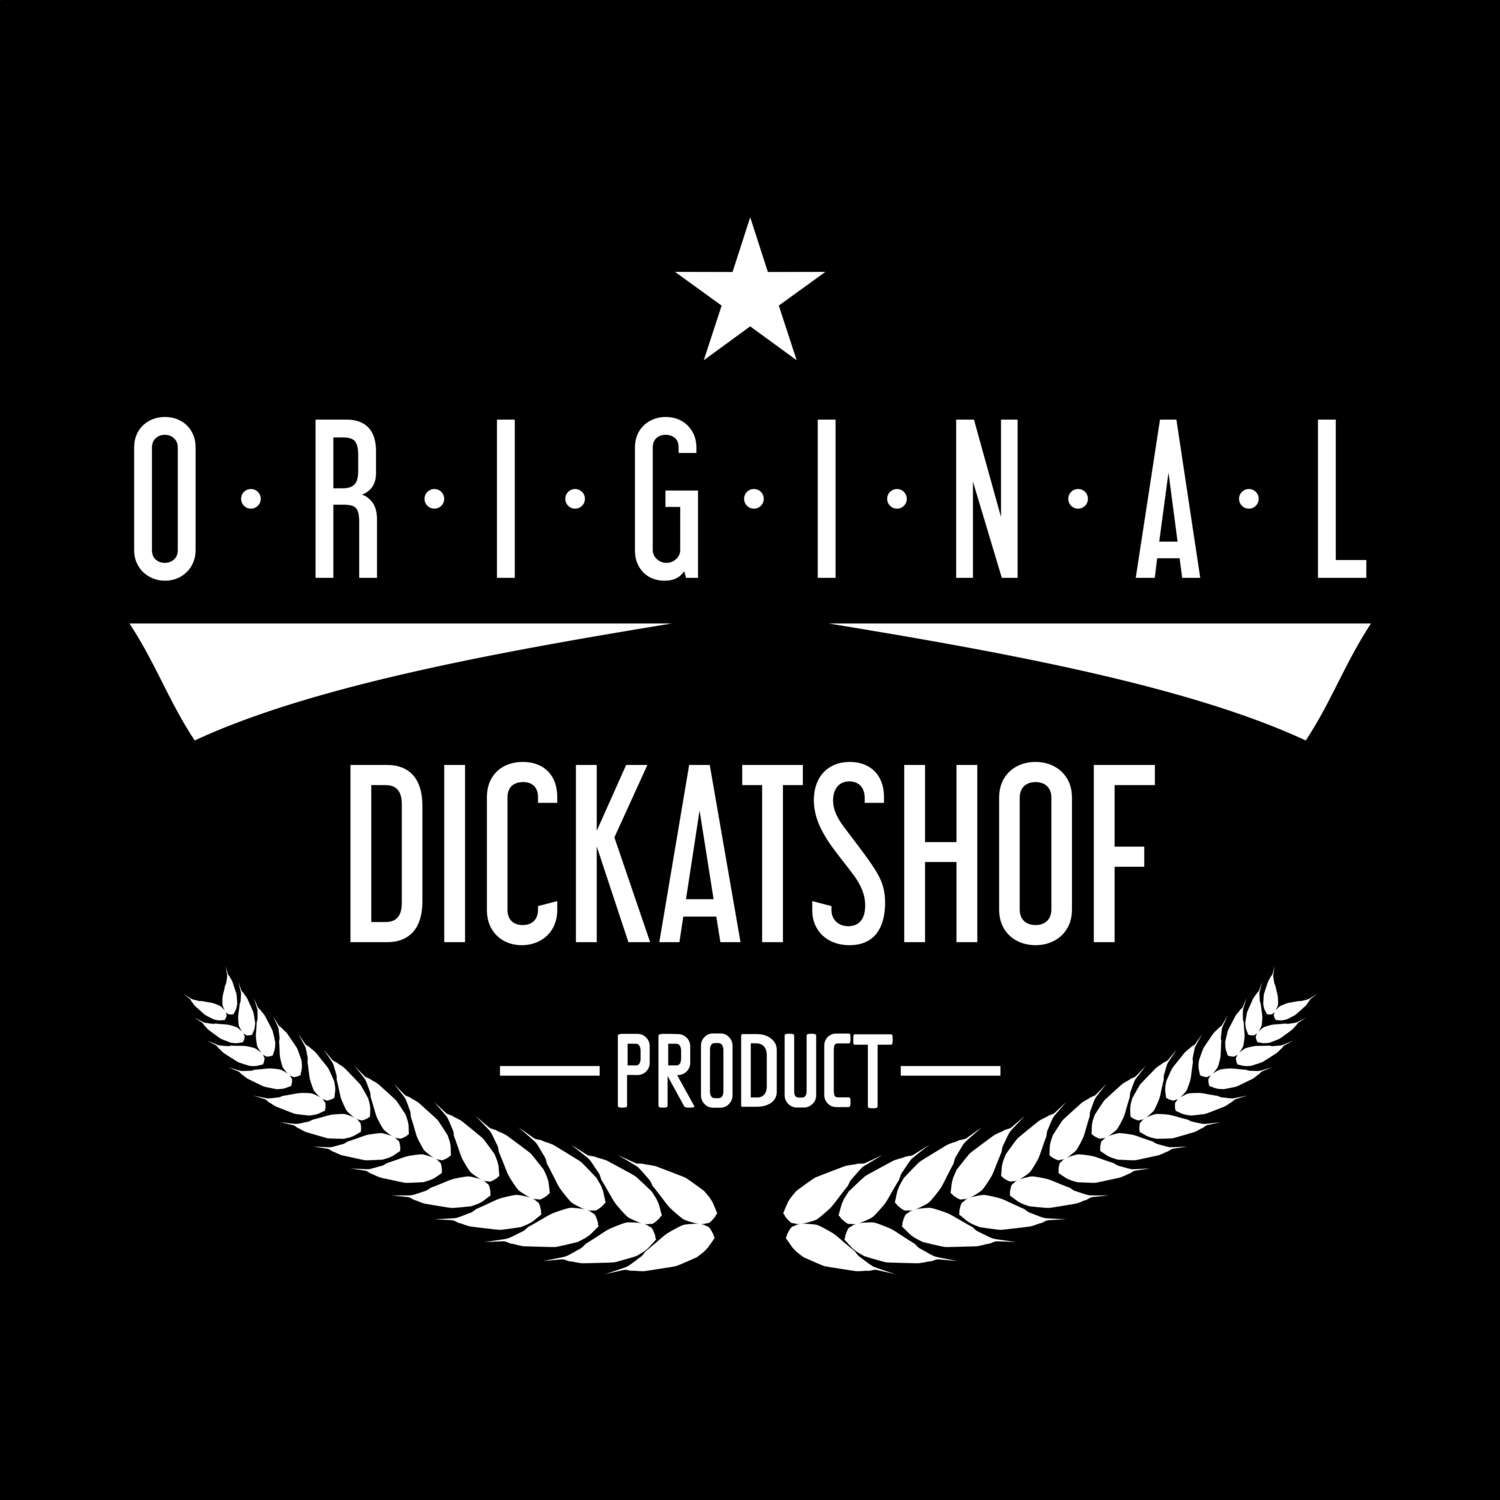 Dickatshof T-Shirt »Original Product«